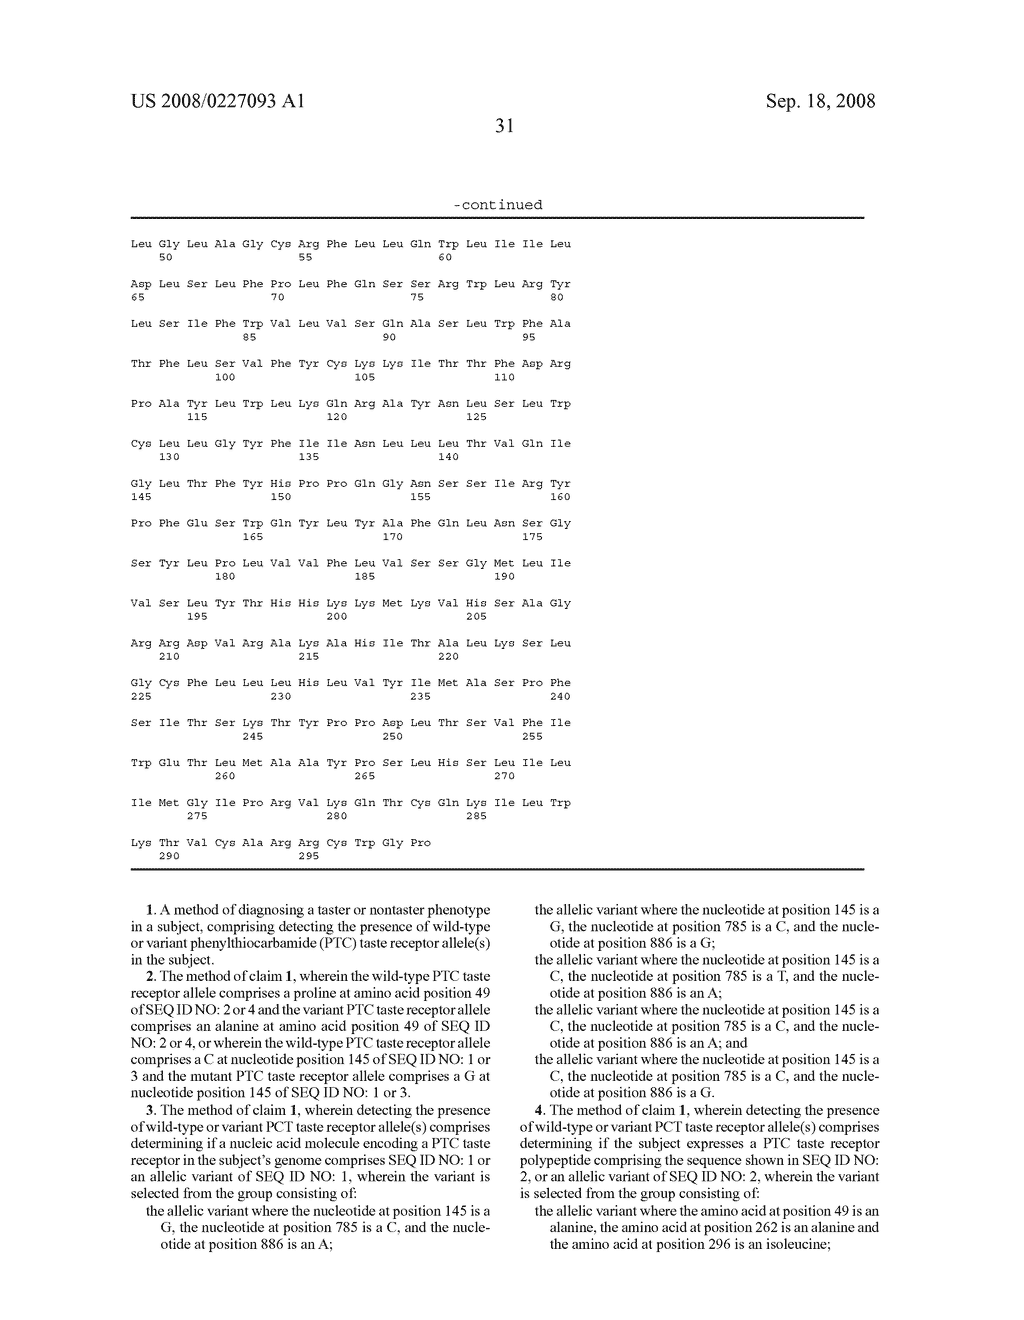 PHENYLTHIOCARBAMIDE (PTC) TASTE RECEPTOR - diagram, schematic, and image 43